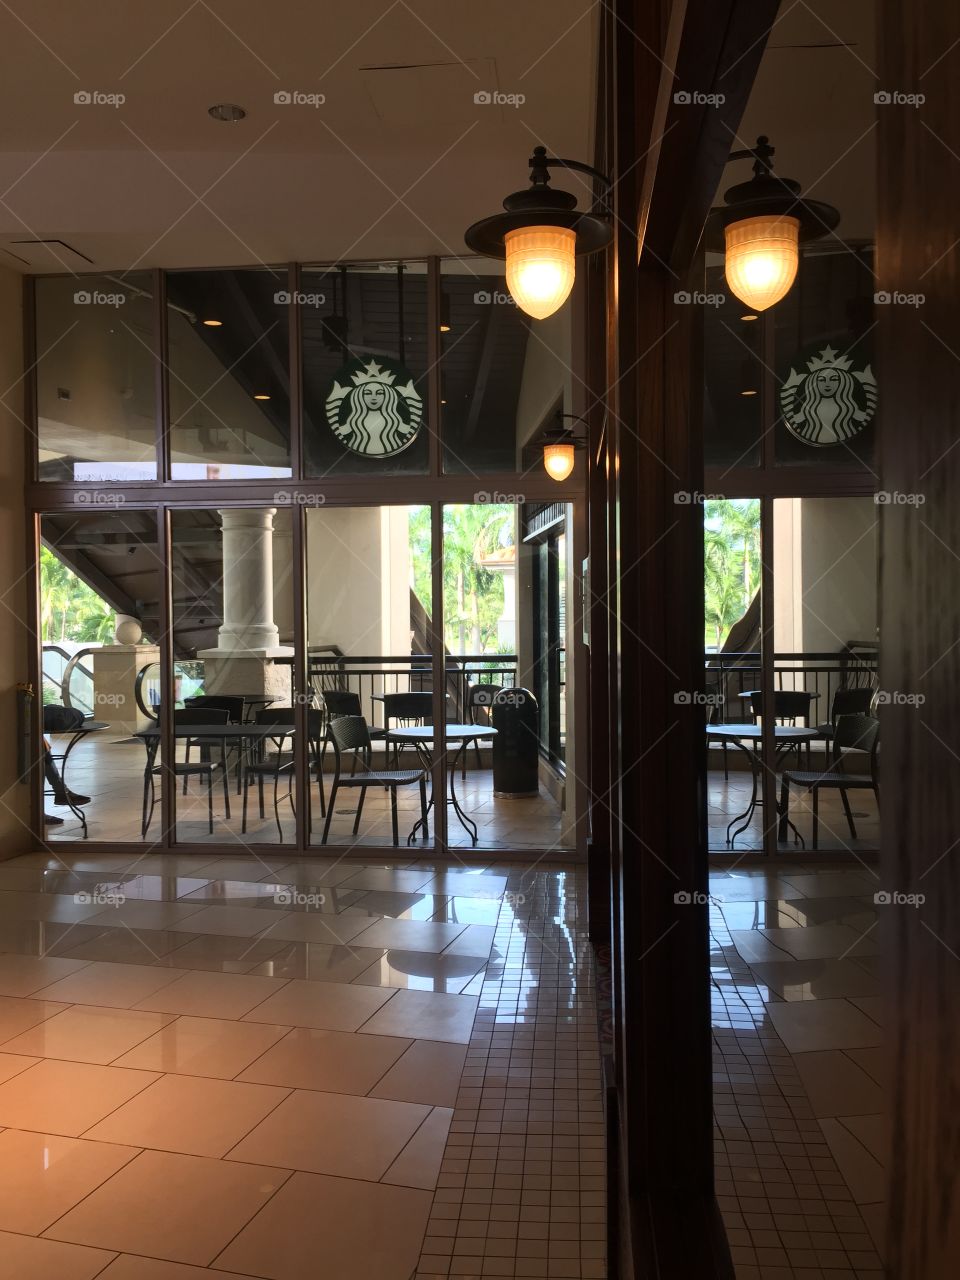 Starbucks in the mall